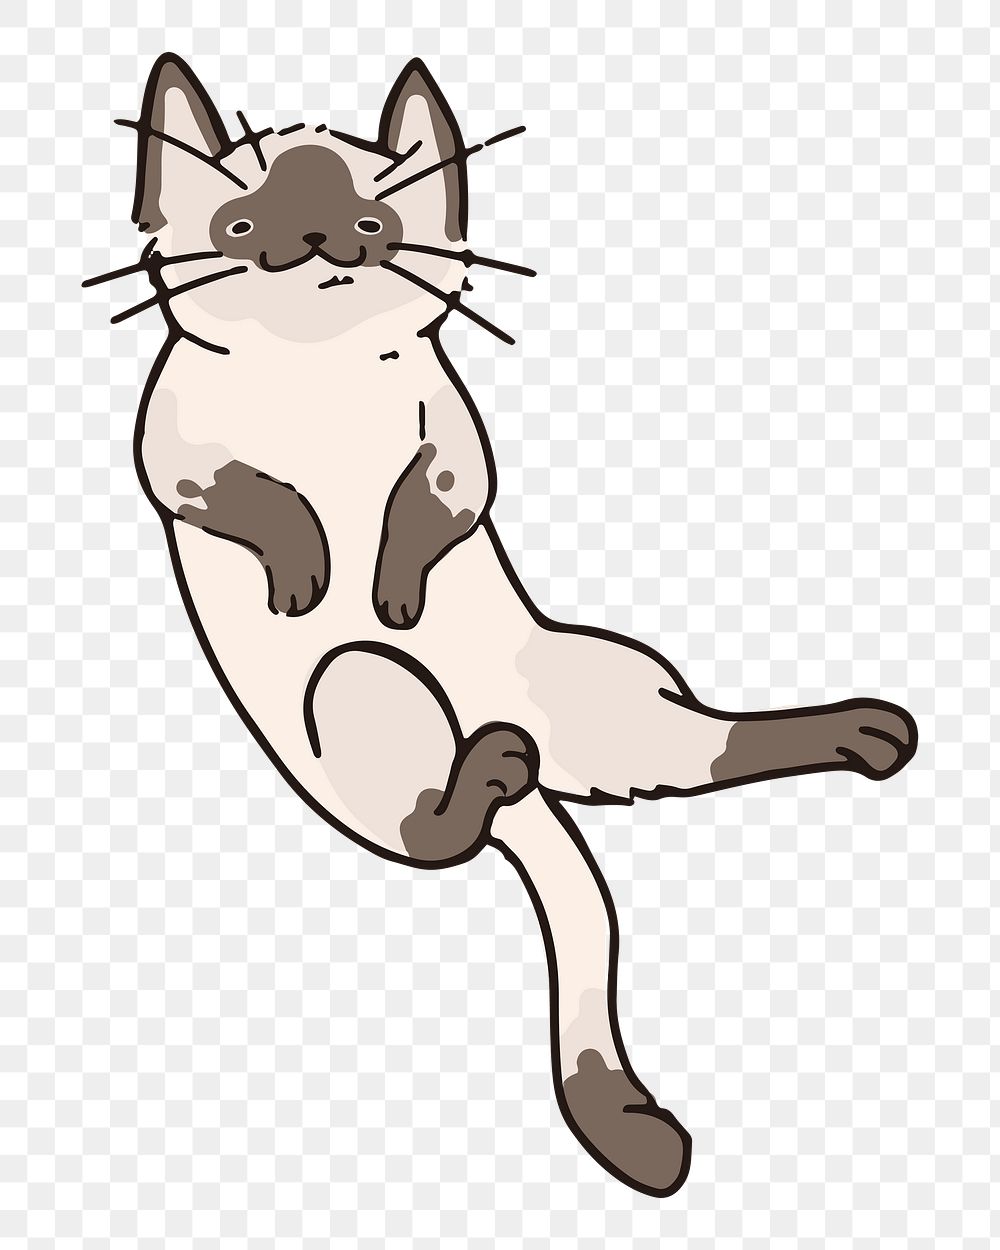 Png adorable cat doodle sticker, transparent background